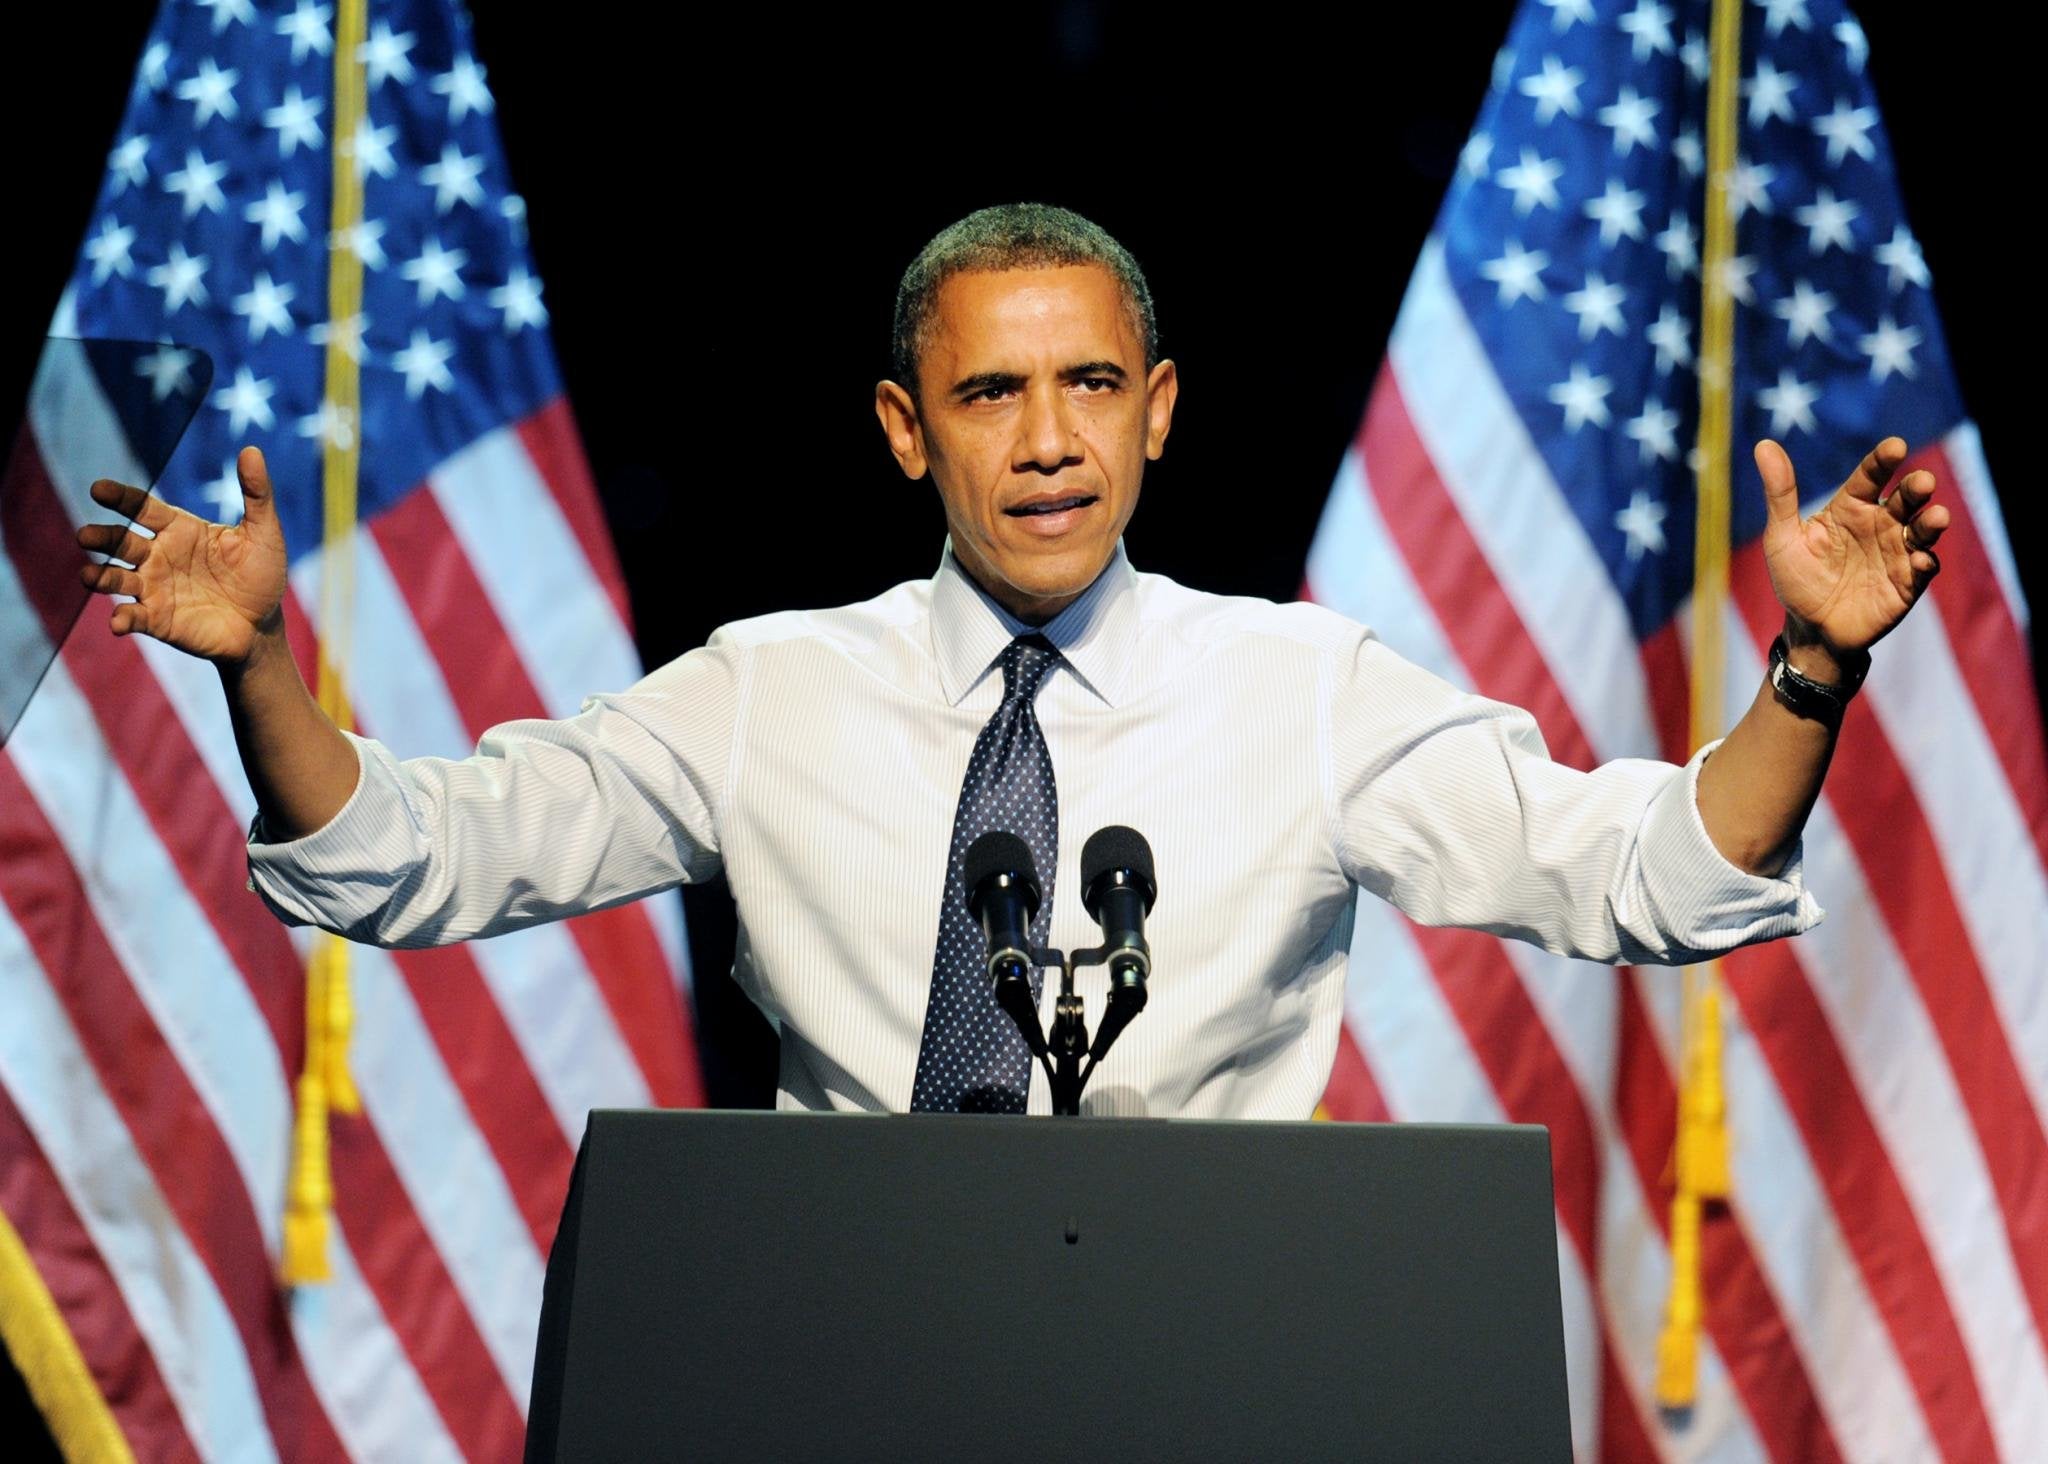 Obama on Presidential Debate: 'I Had a Bad Night'